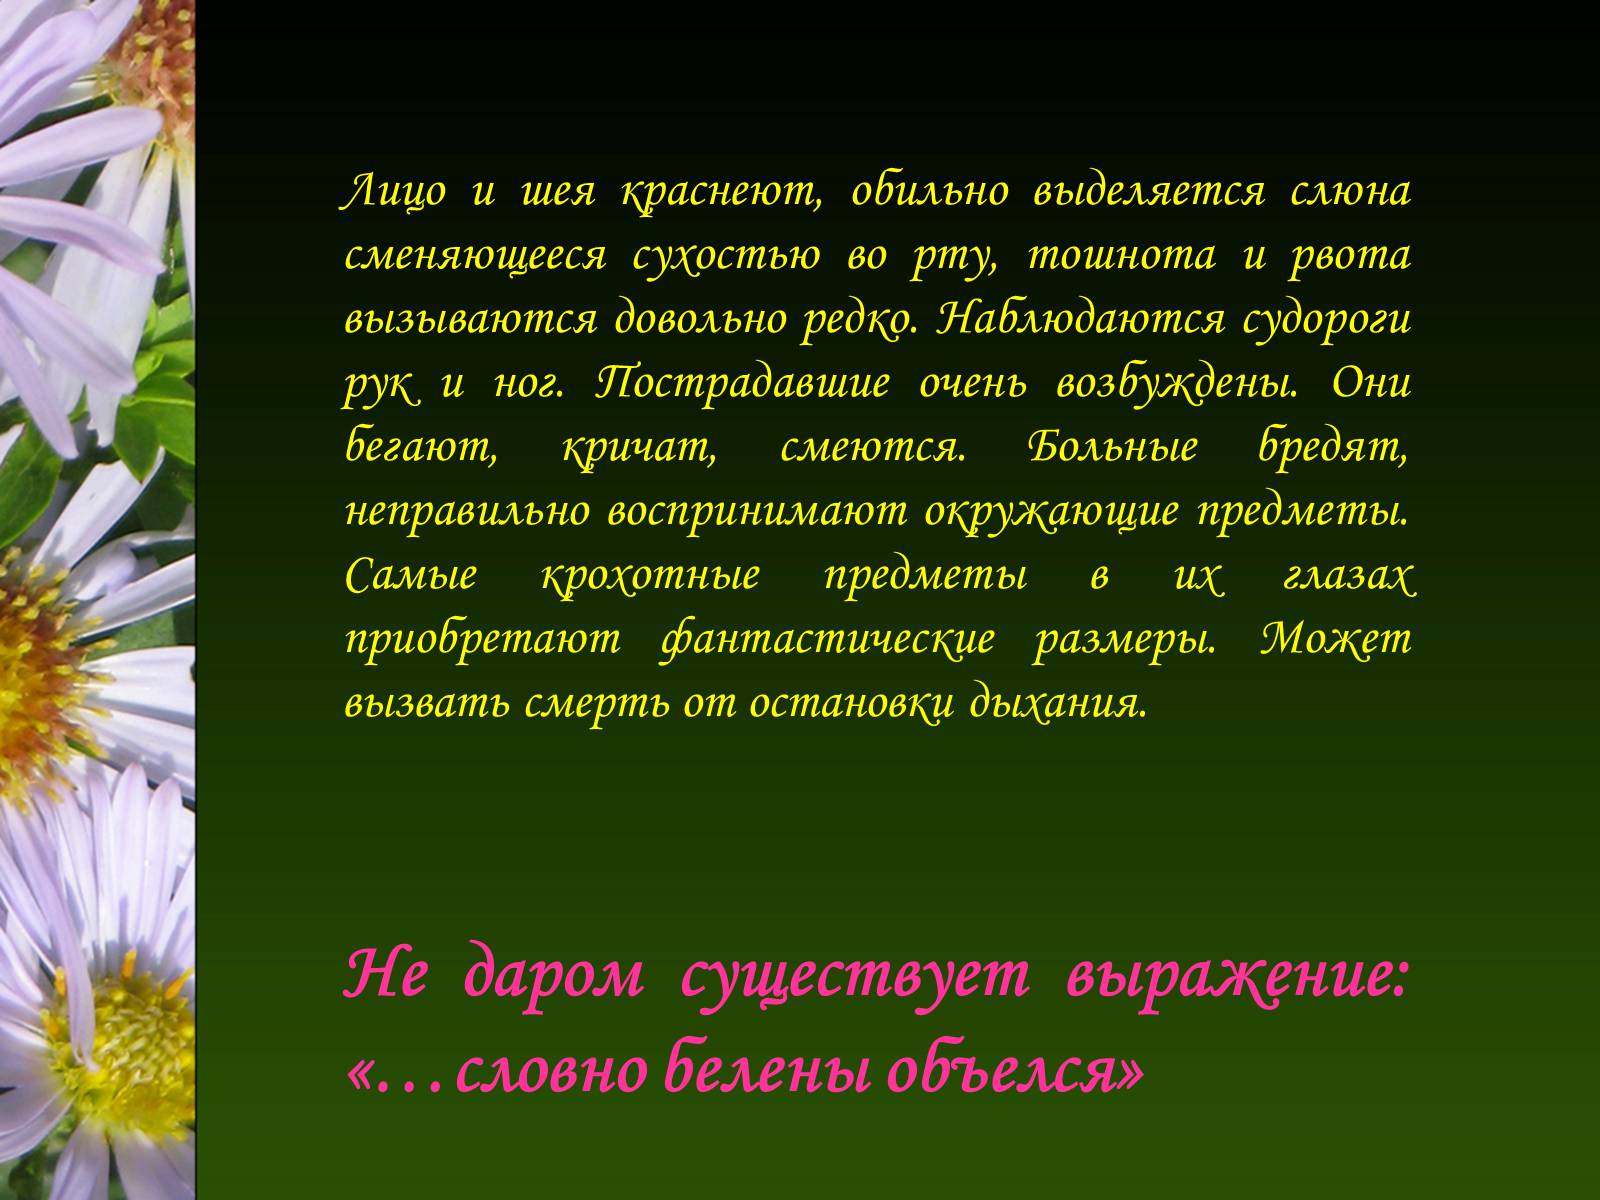 Презентація на тему «Ядовитые растения Украины» - Слайд #25